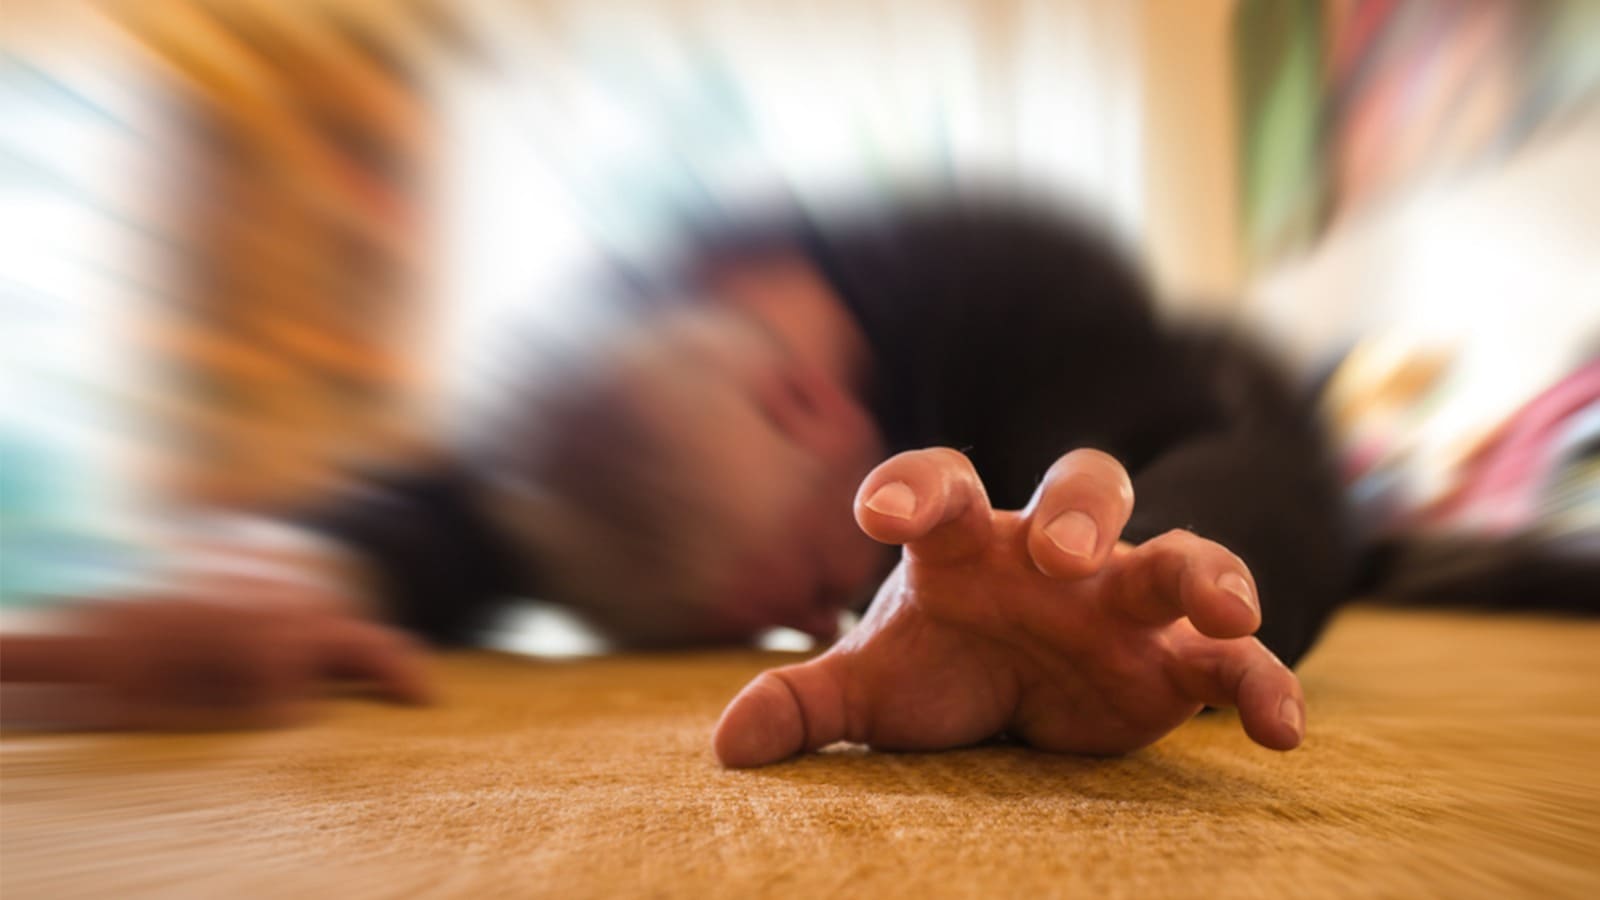 Man lying unconscious on the floor